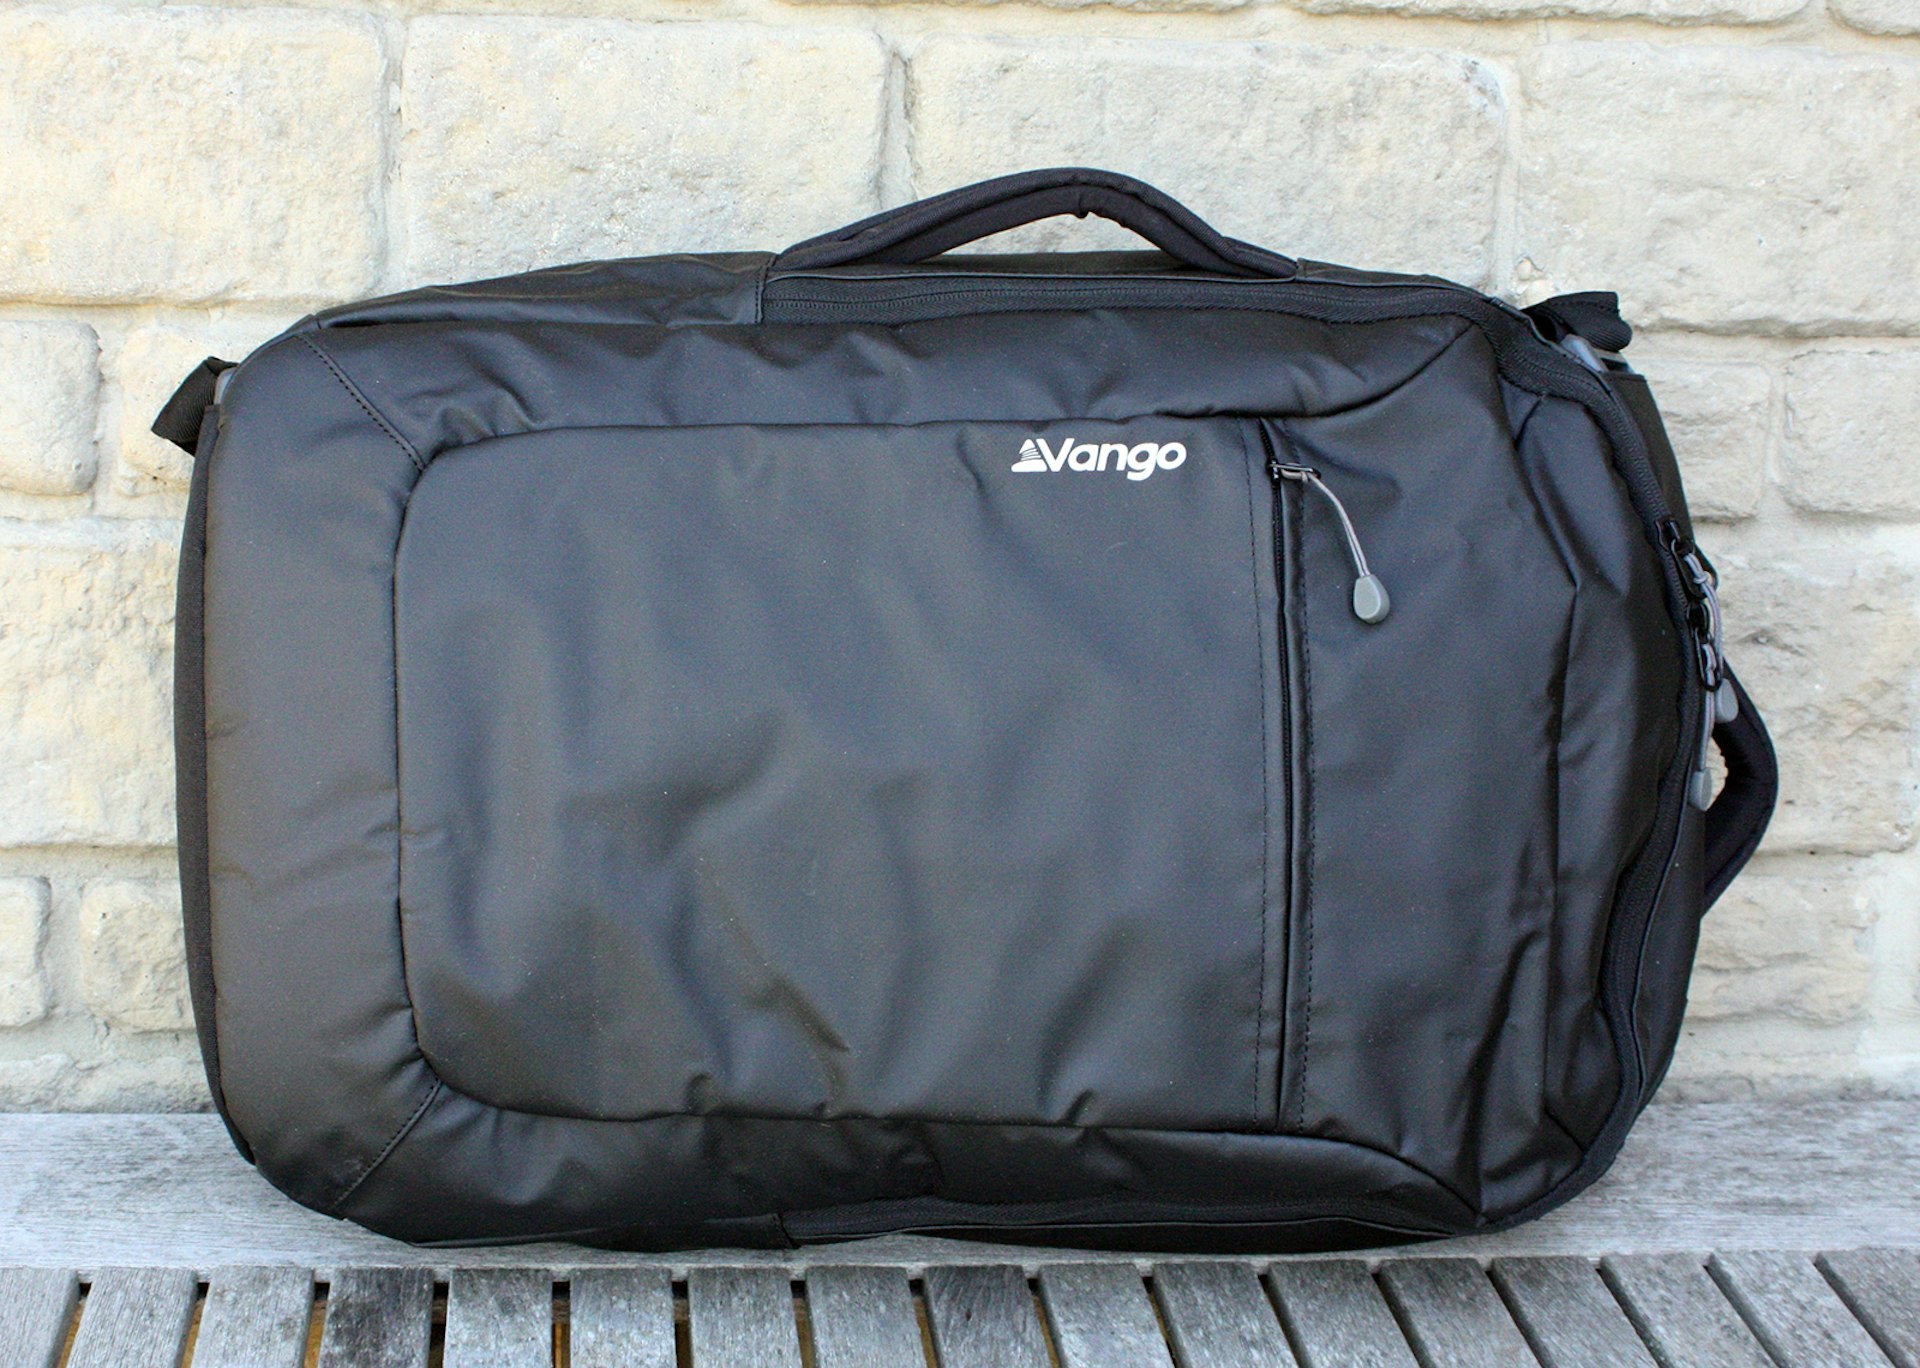 Zest 40 bag from Vango © David Else / Lonely Planet